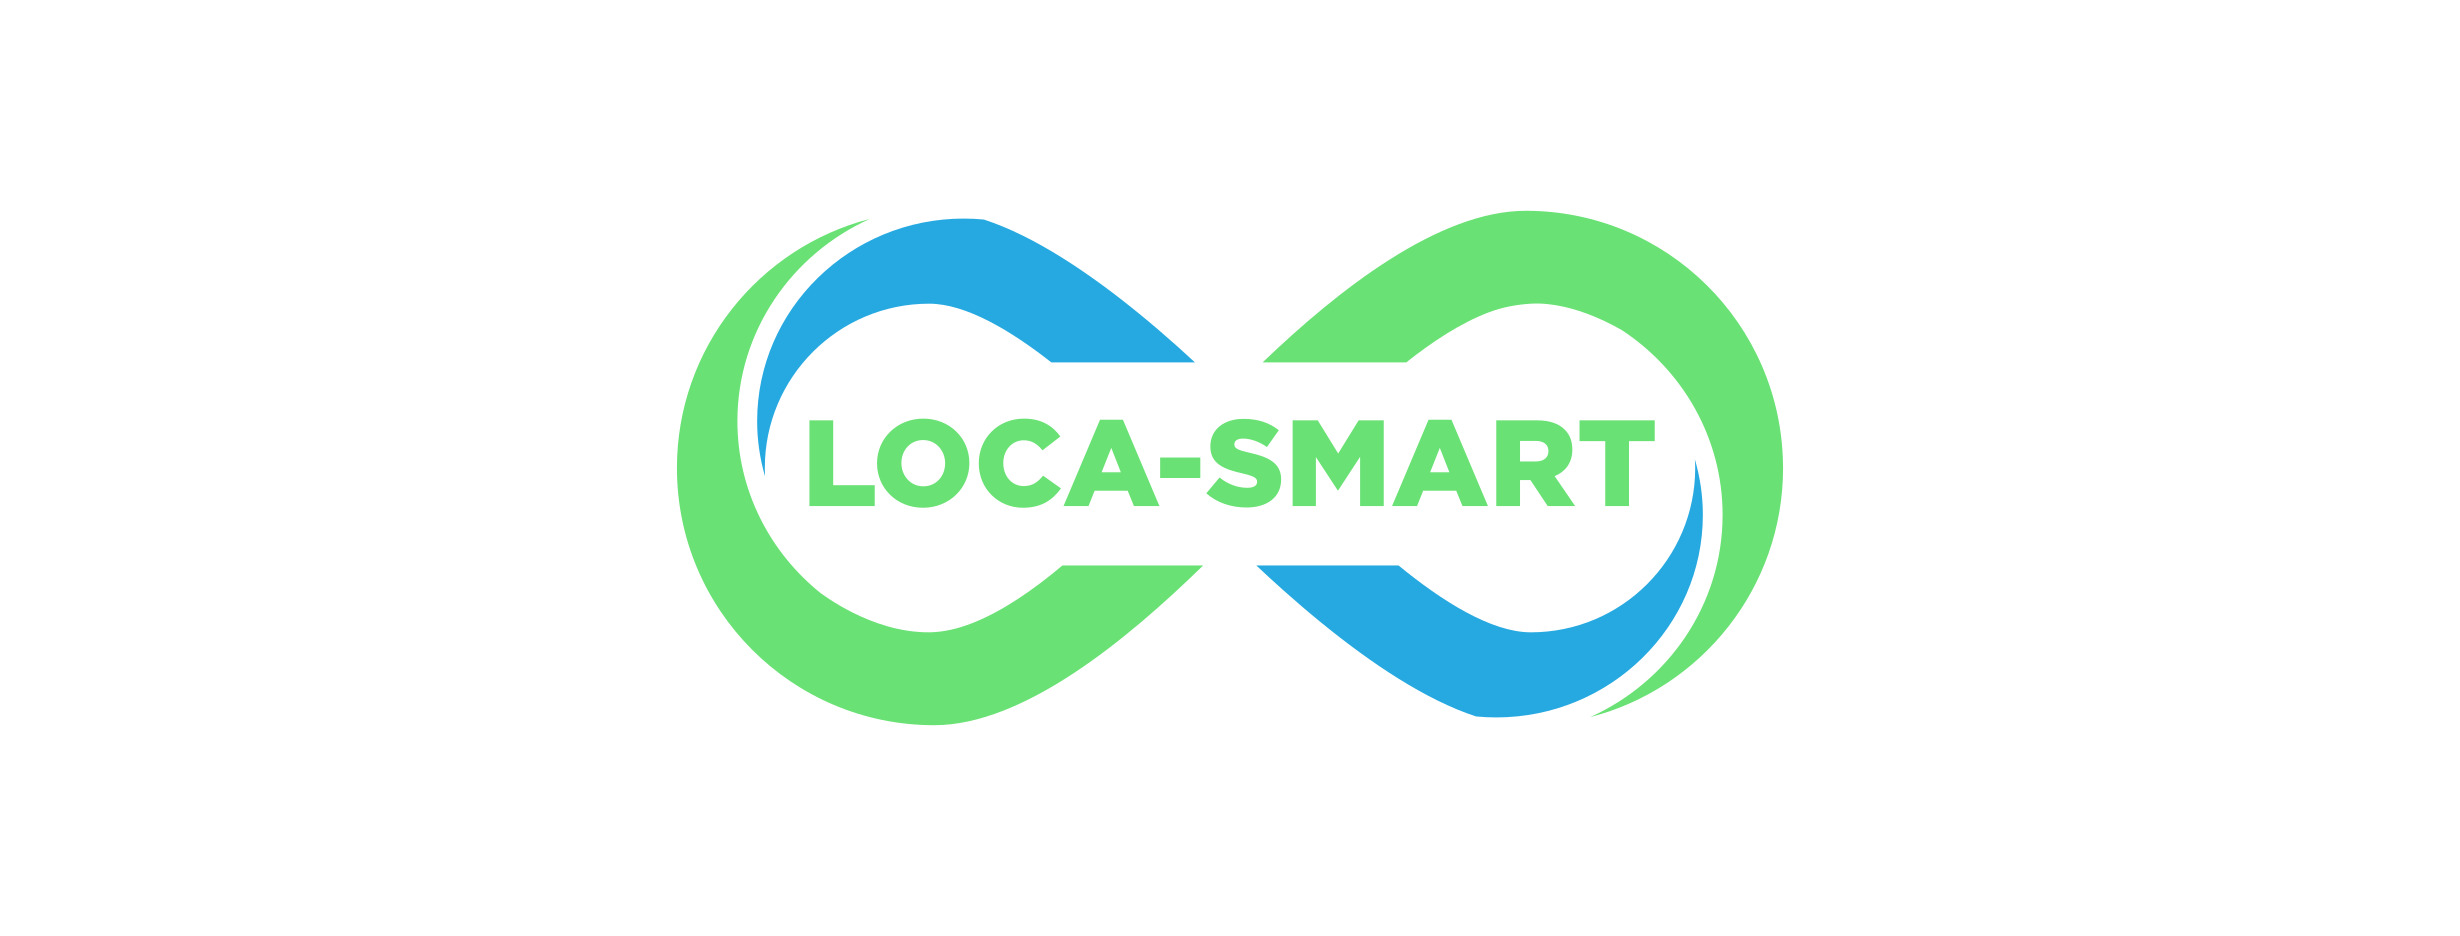 Loca-Smart : Application web de gestion des locations des véhicules